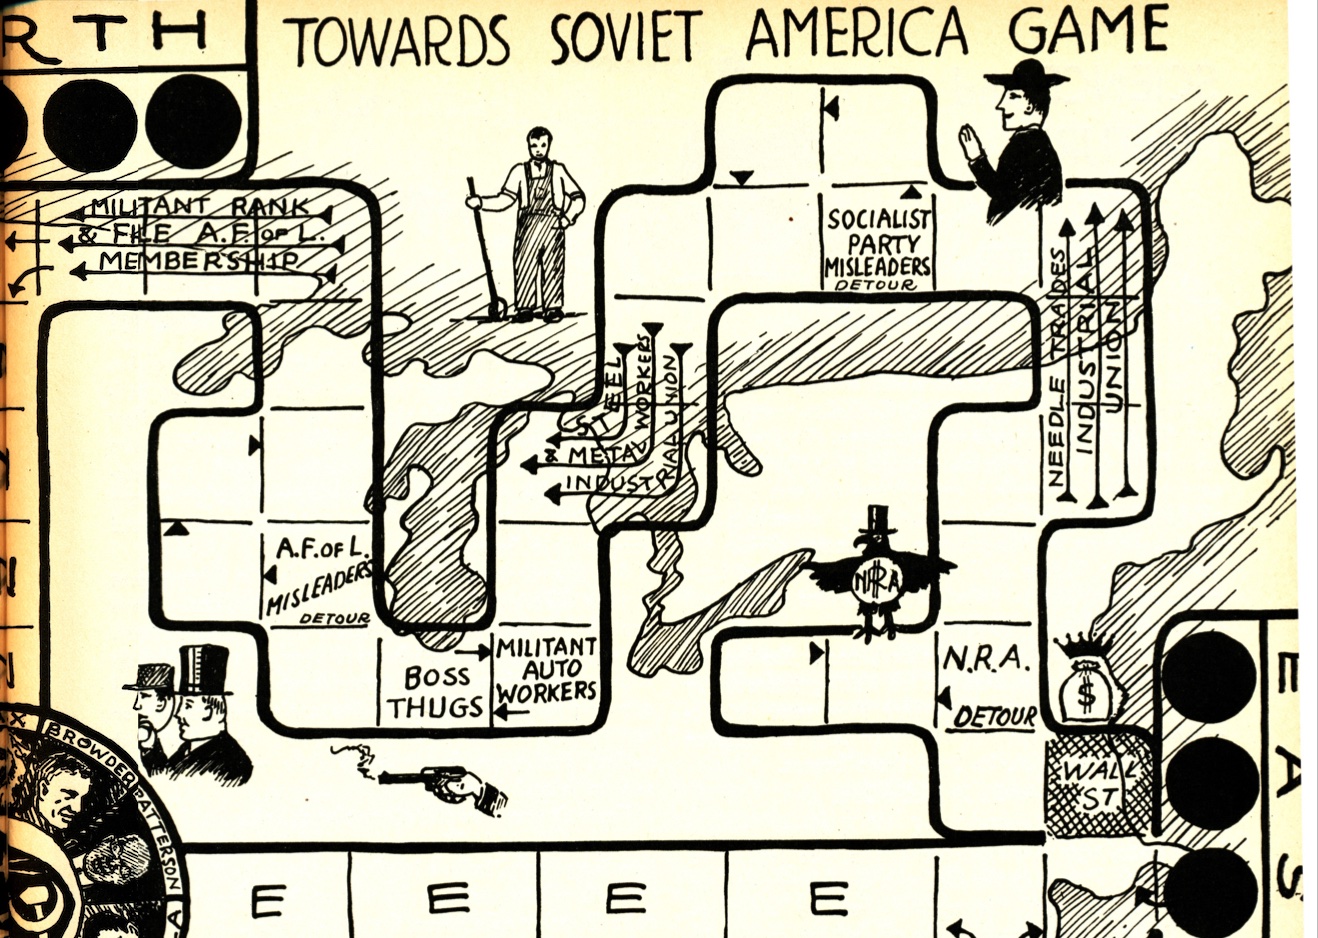 Toward Soviet America, the board game